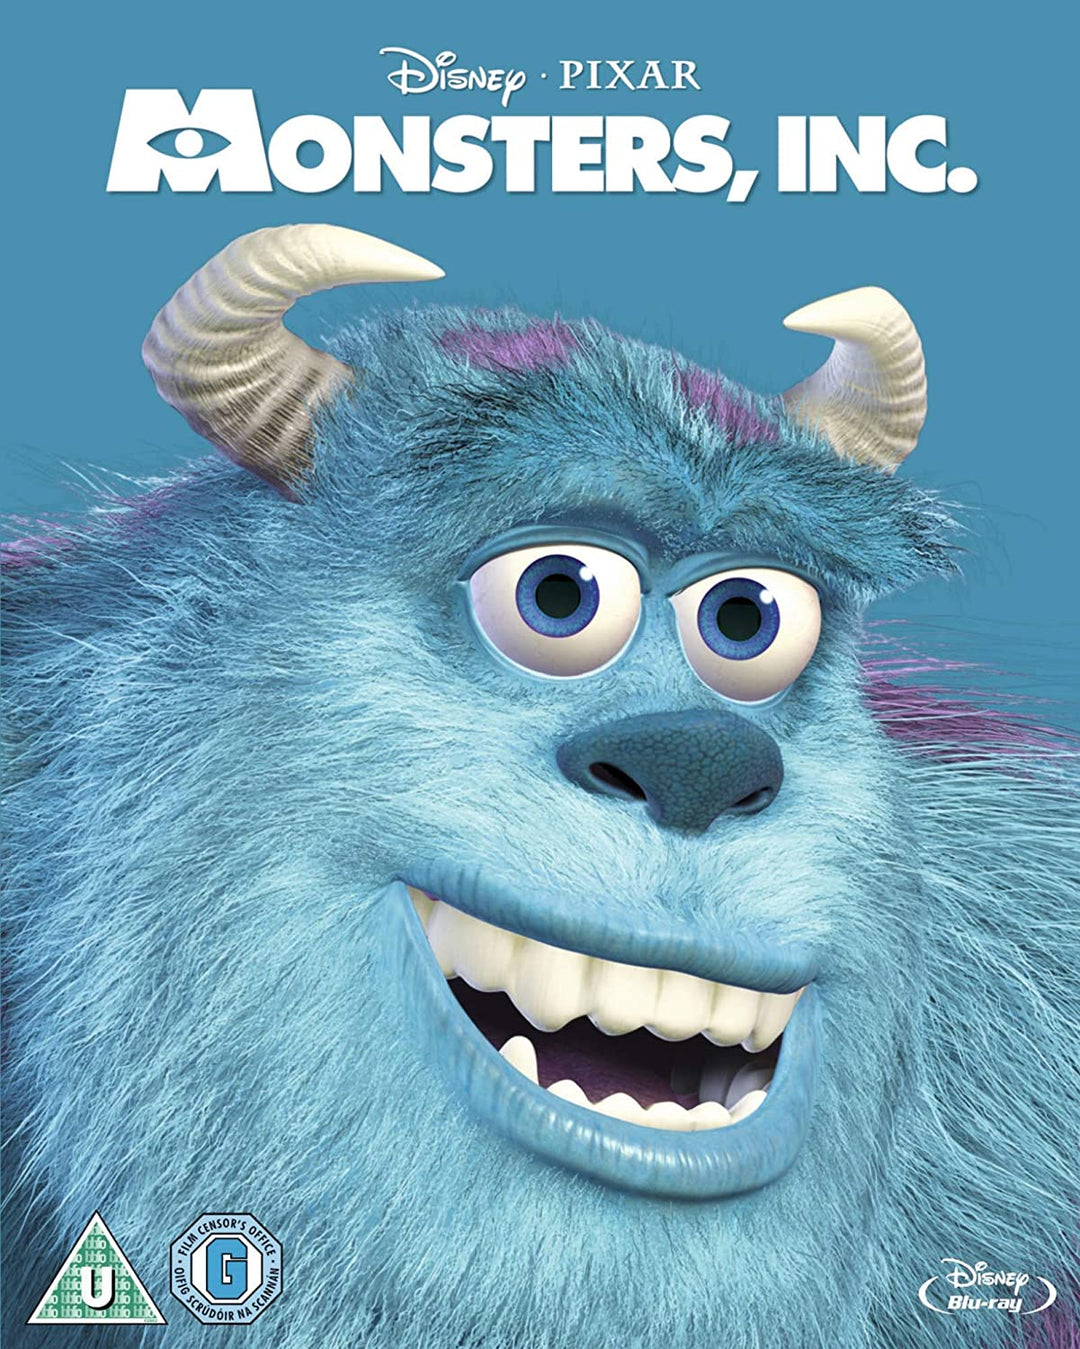 Monsters, Inc. [Region Free] [Blu-ray]